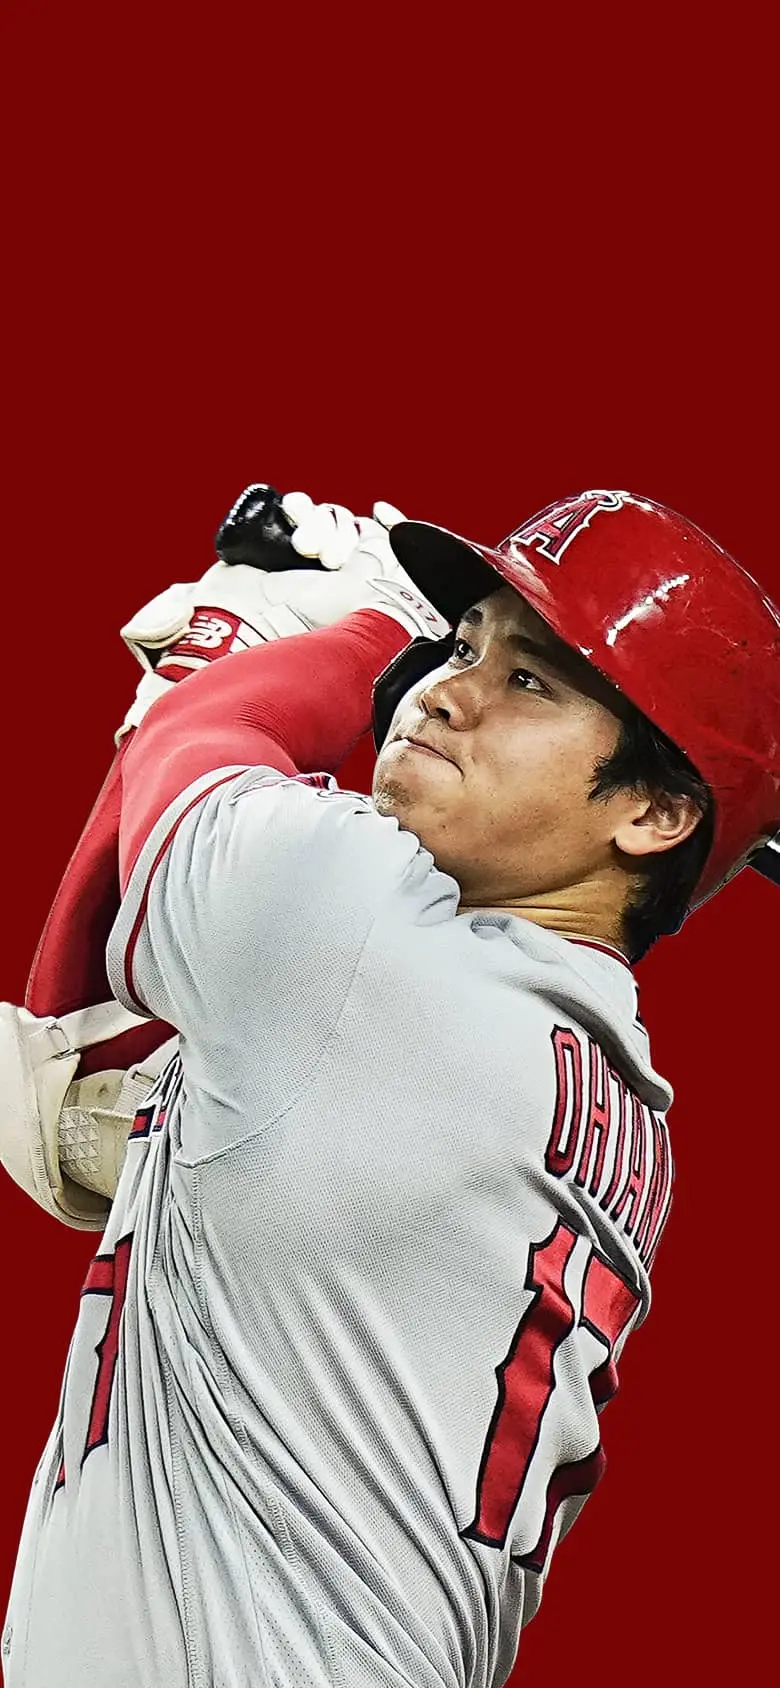 Shohei Ohtani hitting a home run.